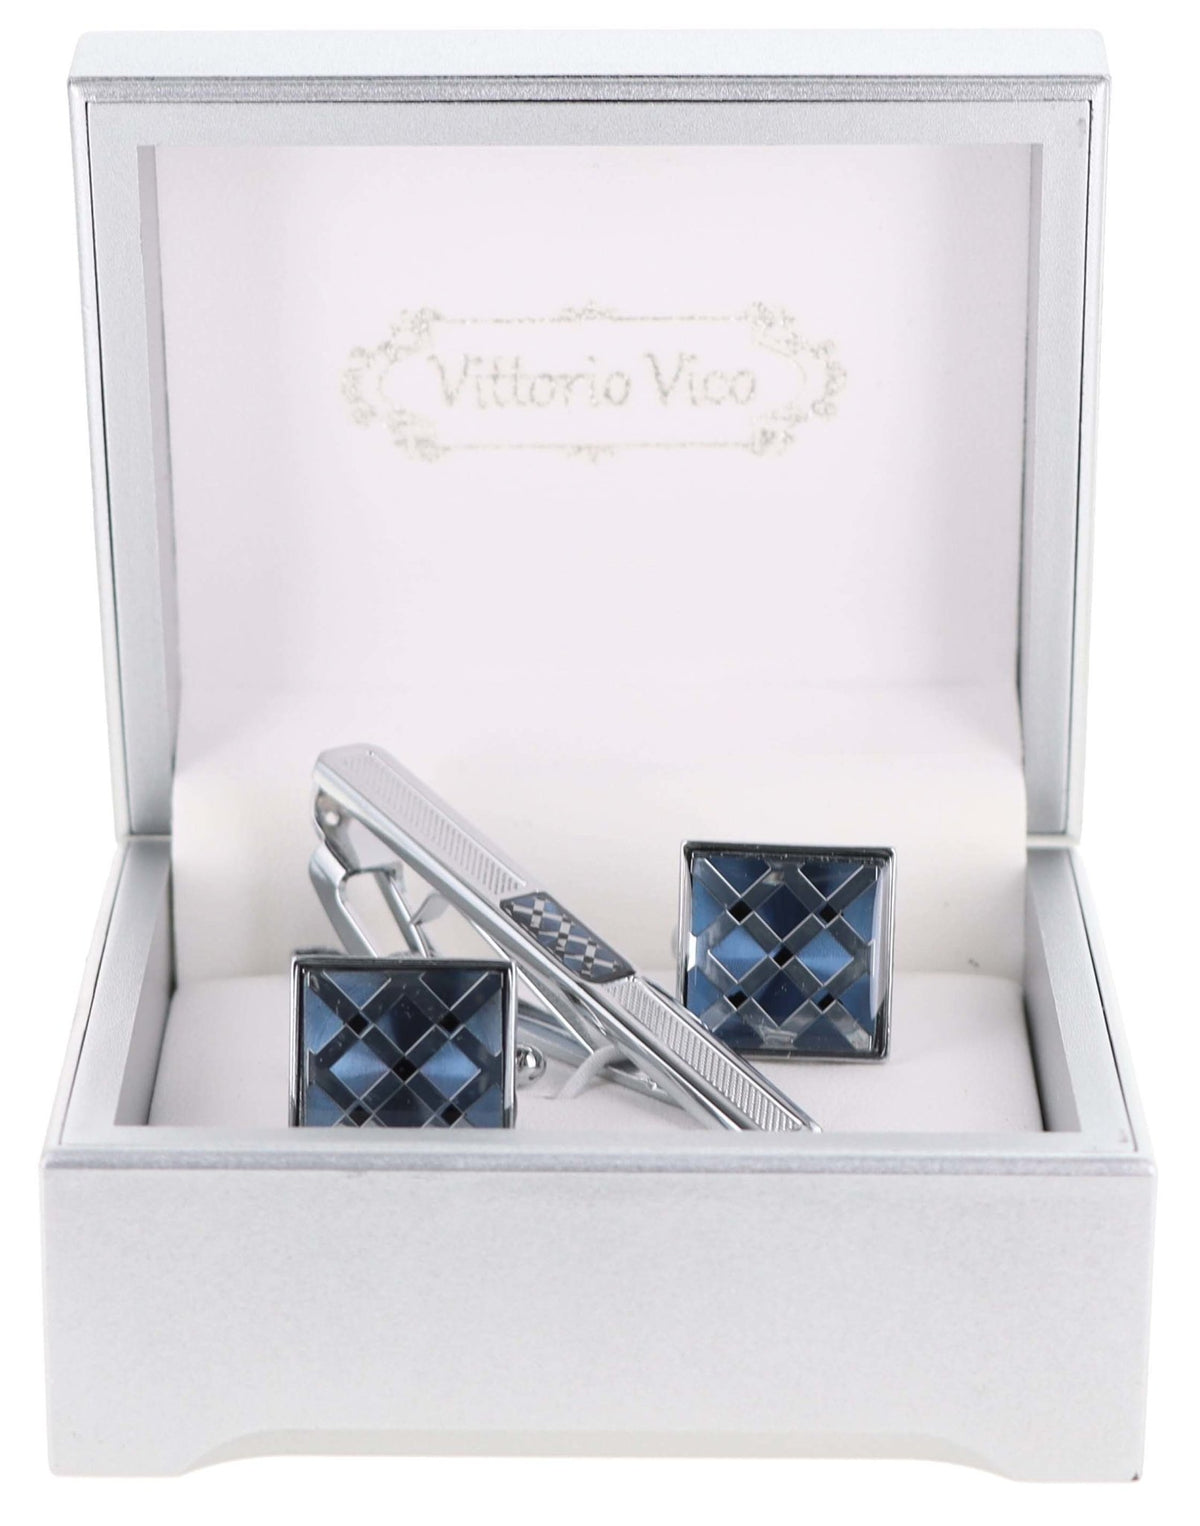 Vittorio Vico Gold and Silver Enamel Cufflinks &amp; Tie Bar Set